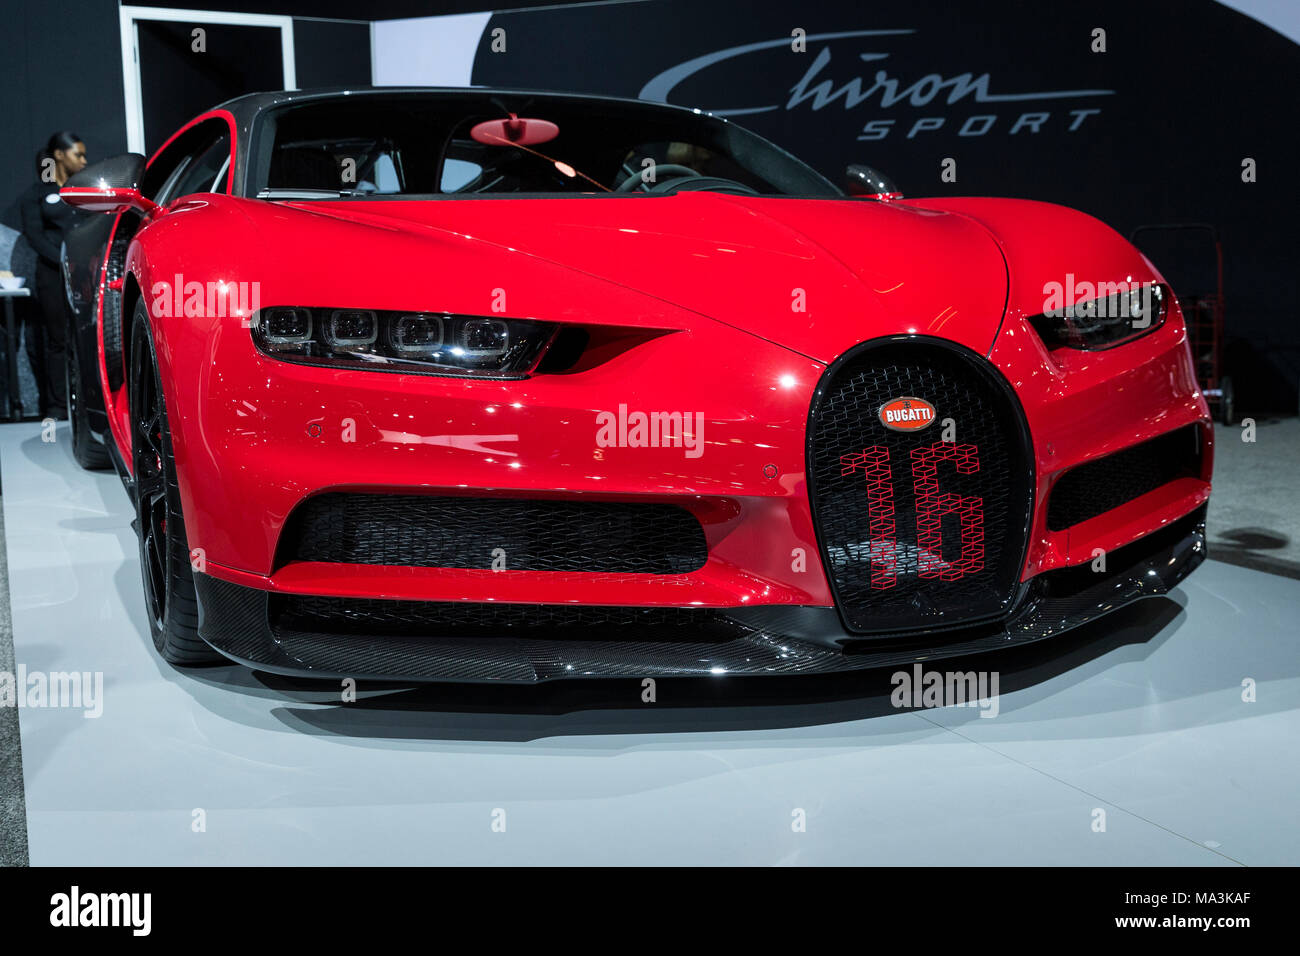 New York, NY - March 29, 2018: Bugatti Chiron Sport on display at 2018 New  York International Auto Show at Jacob Javits Center Credit: lev radin/Alamy  Live News Stock Photo - Alamy